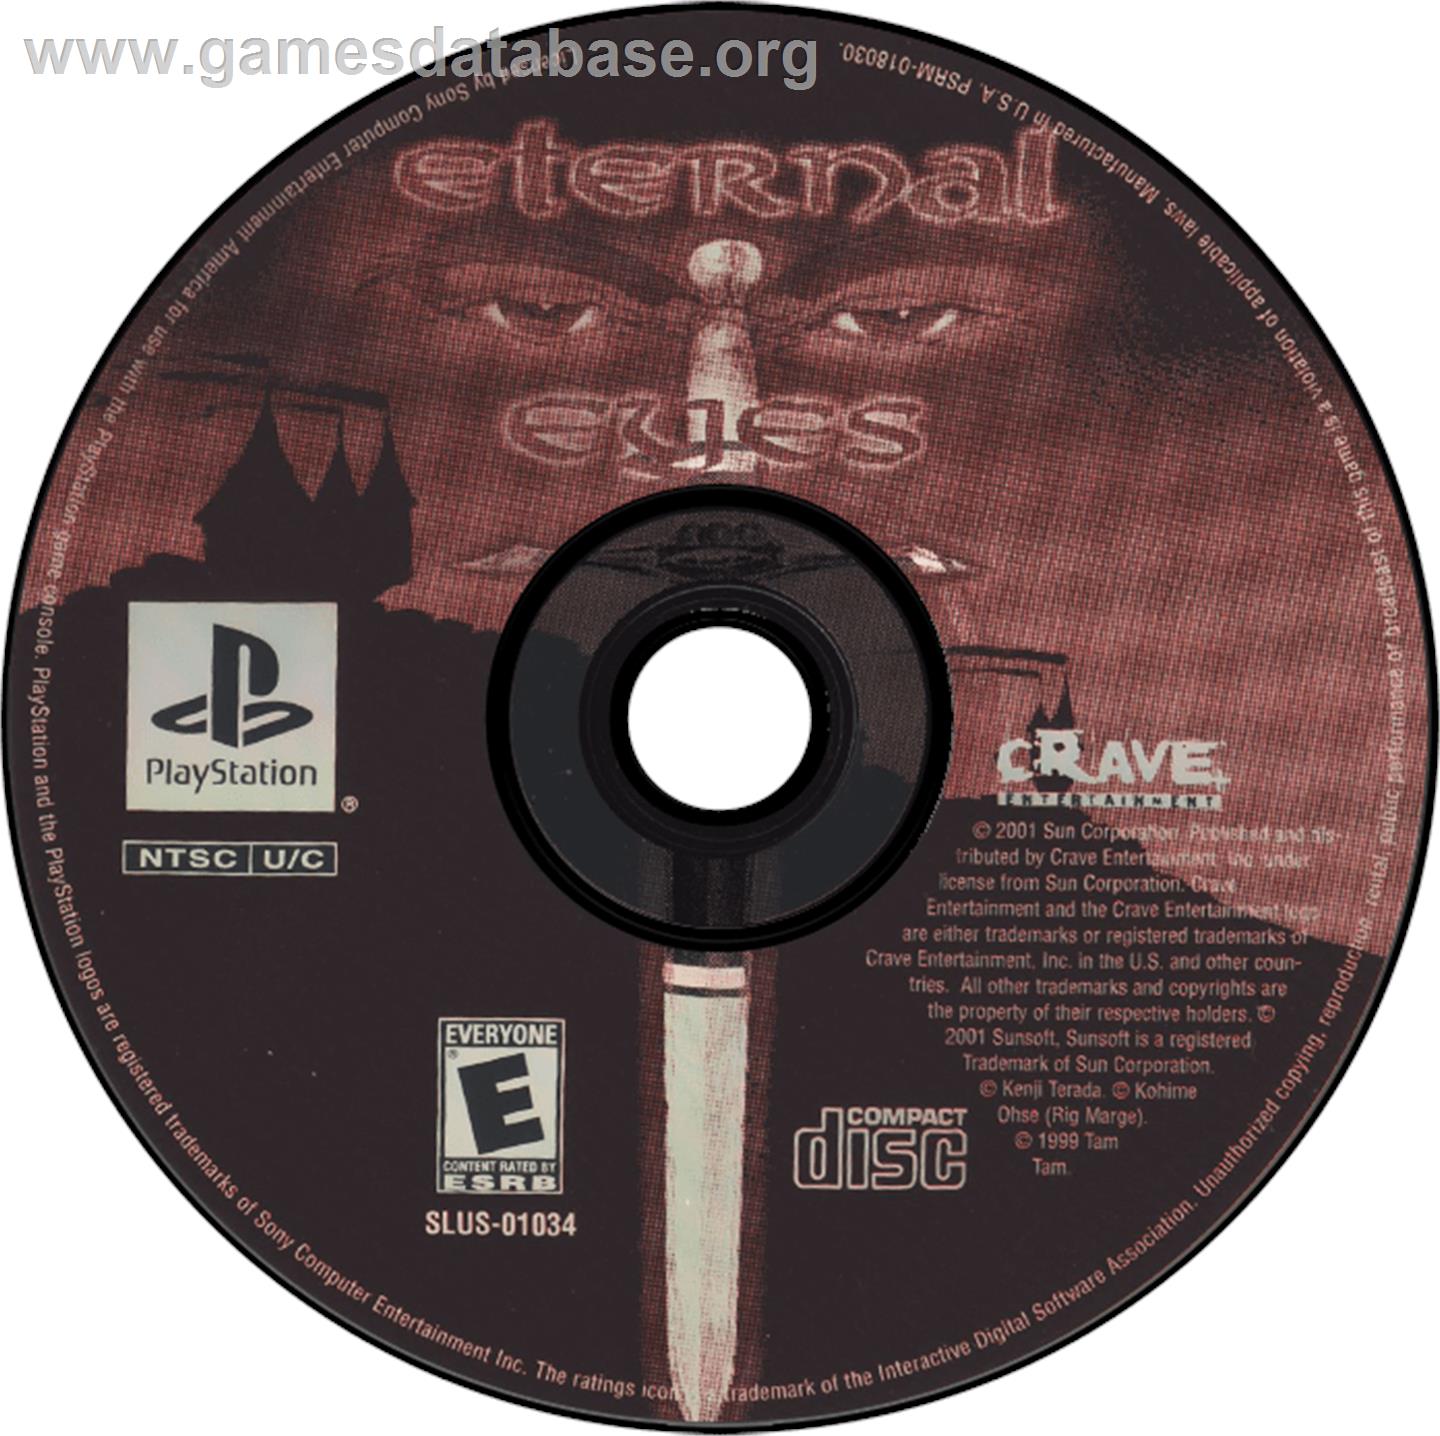 Eternal Eyes - Sony Playstation - Artwork - Disc